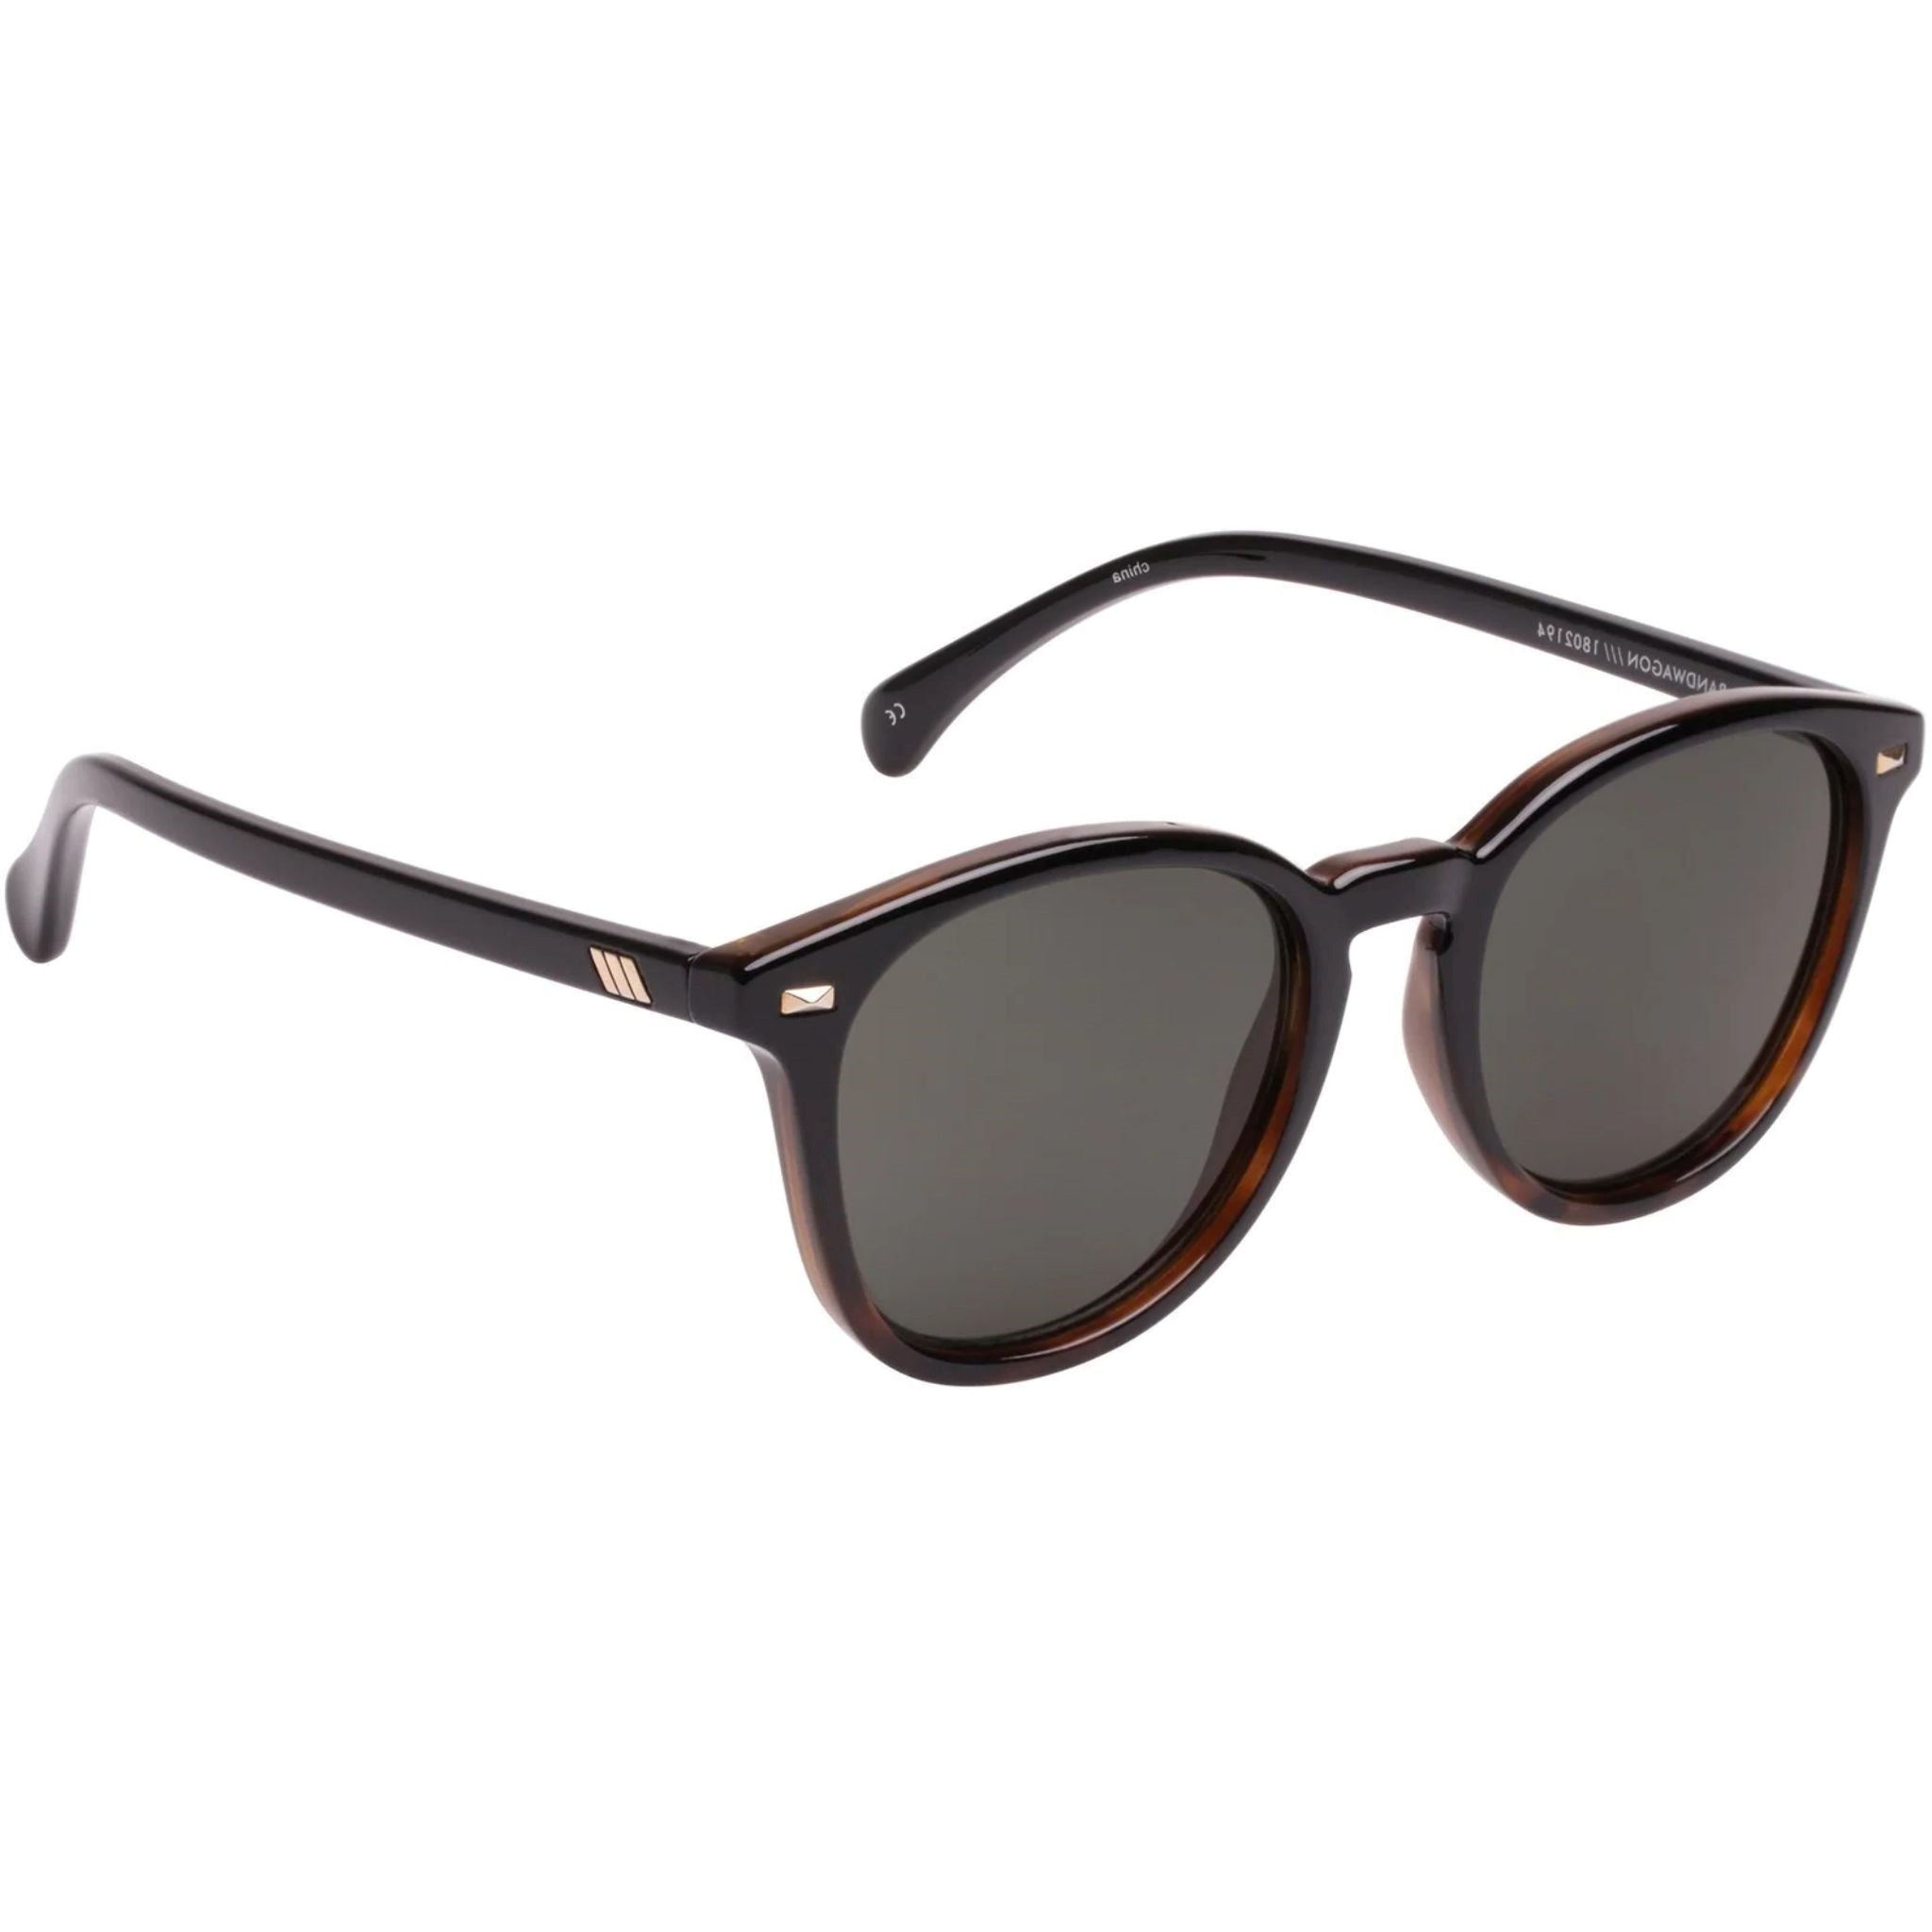 Le Specs Bandwagon Round Sunglasses in Tort | ASOS